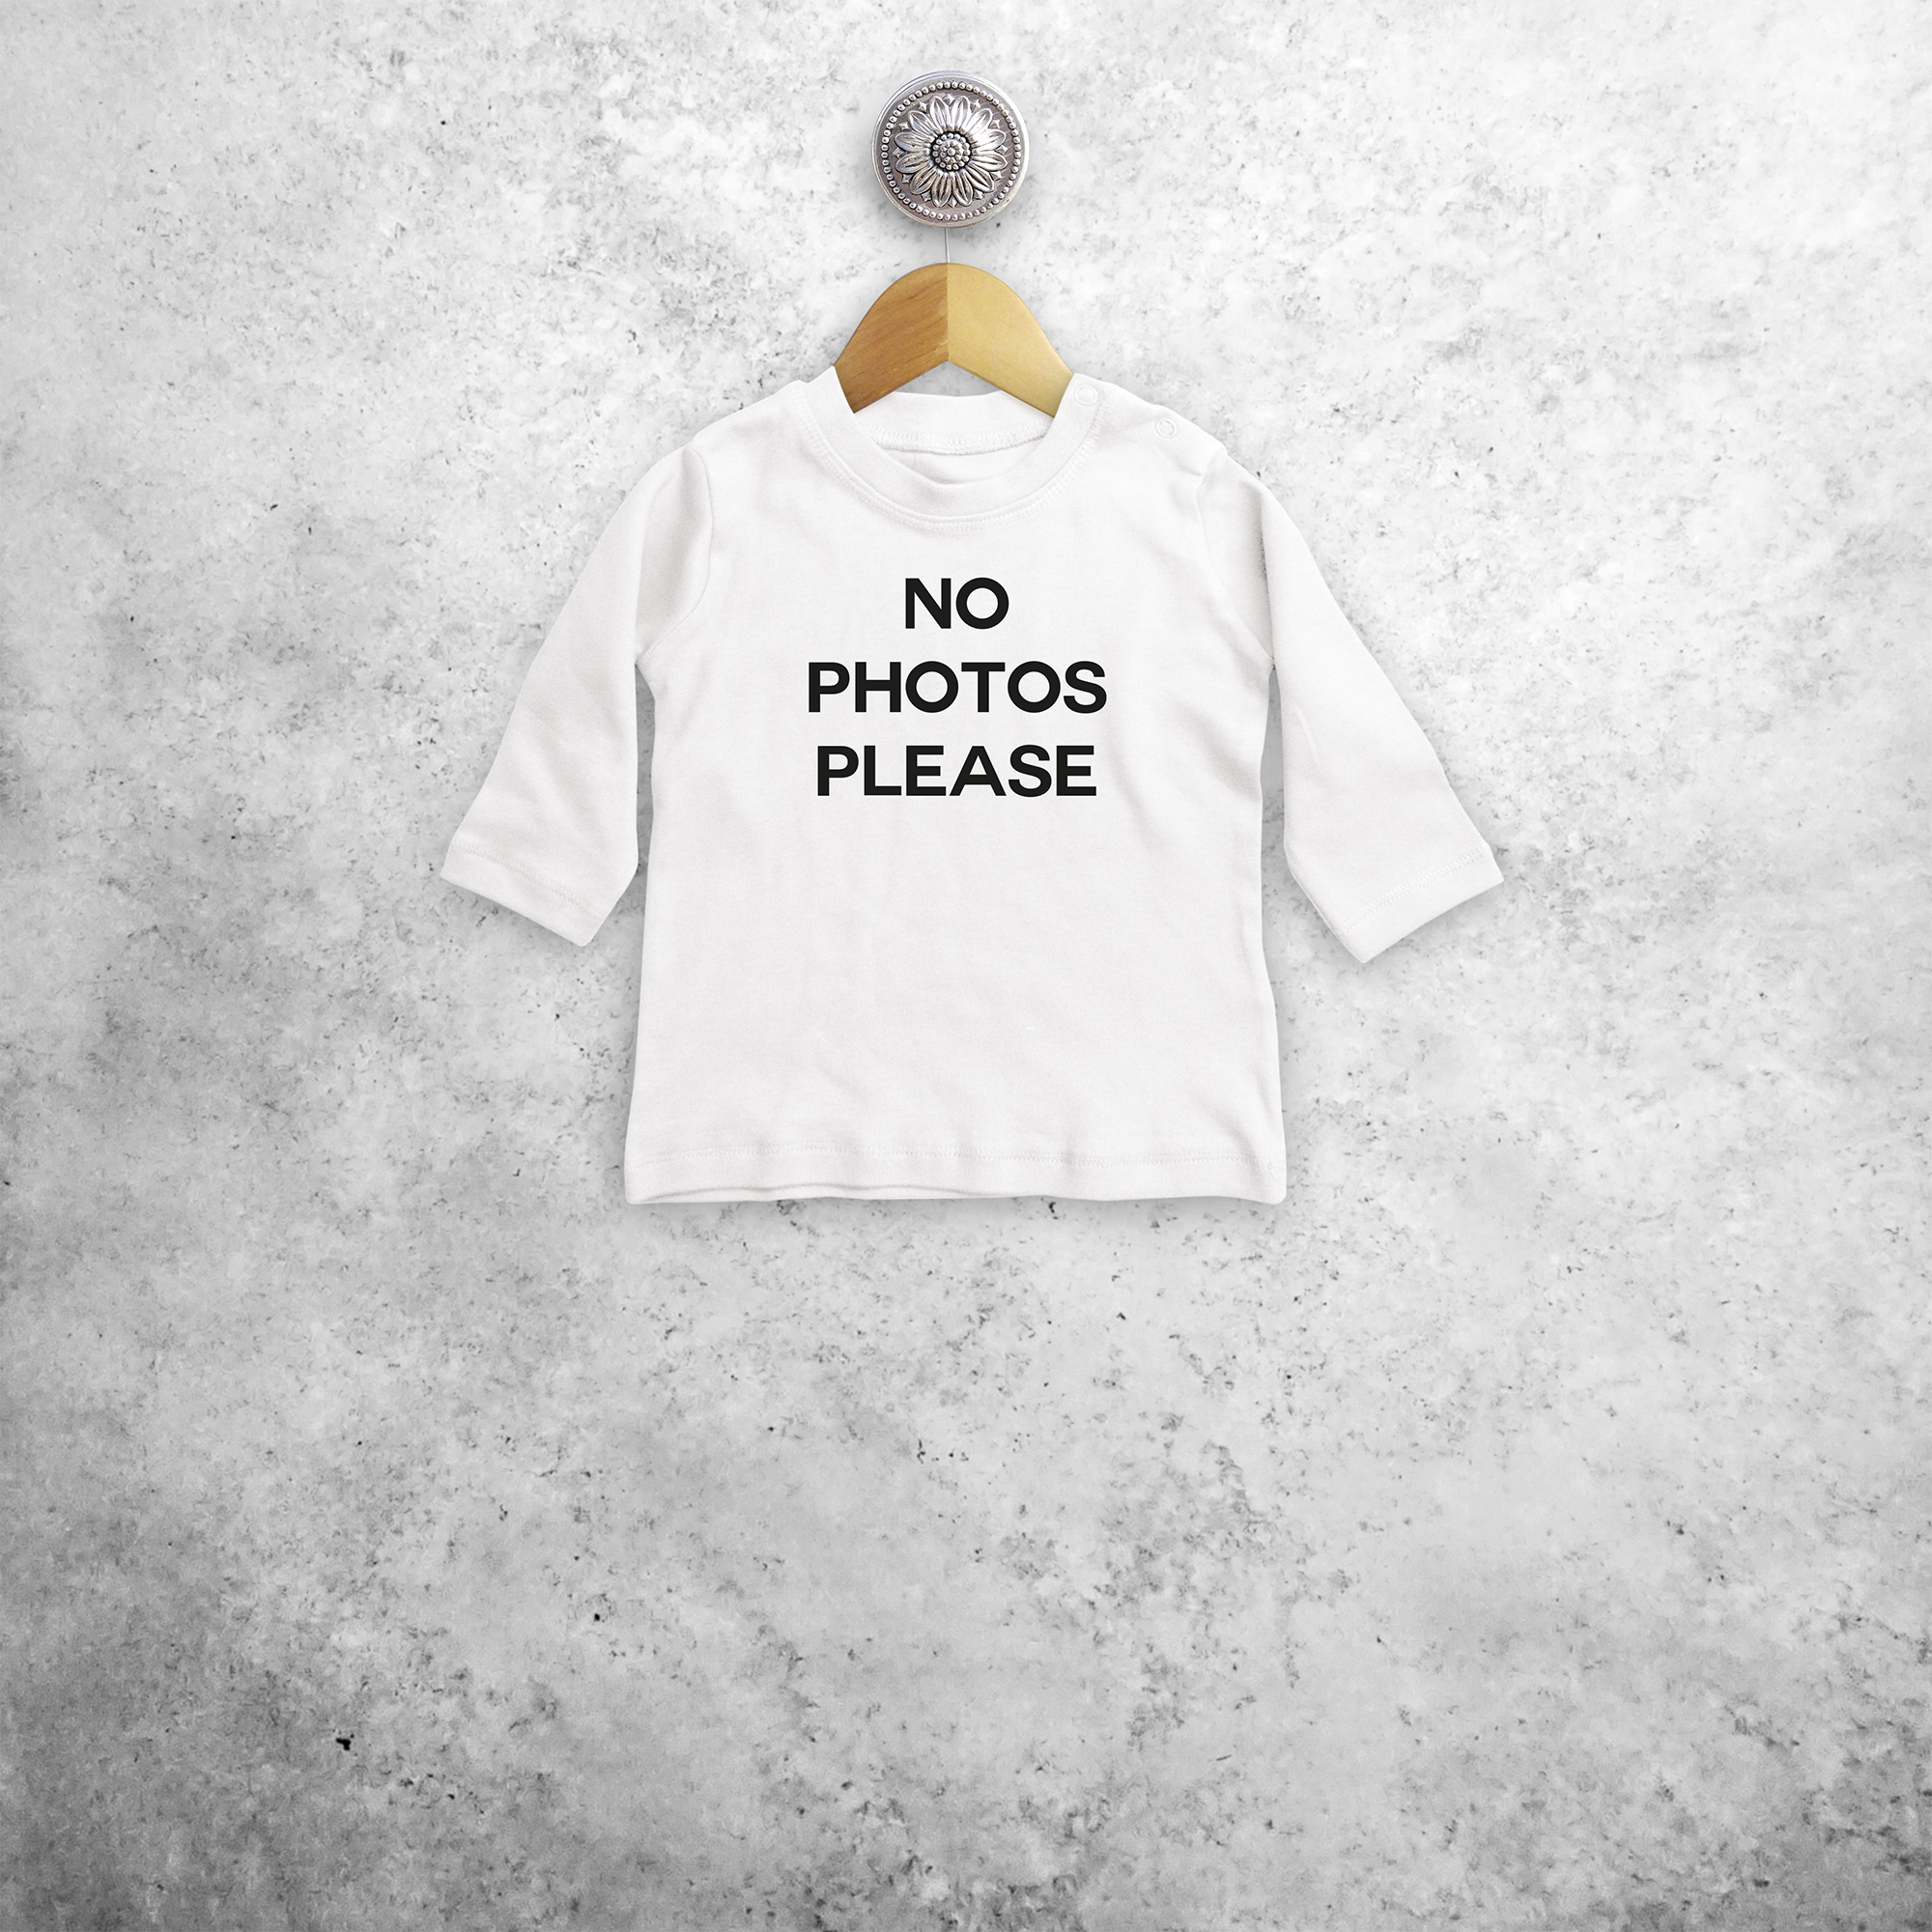 'No photos please' baby longsleeve shirt